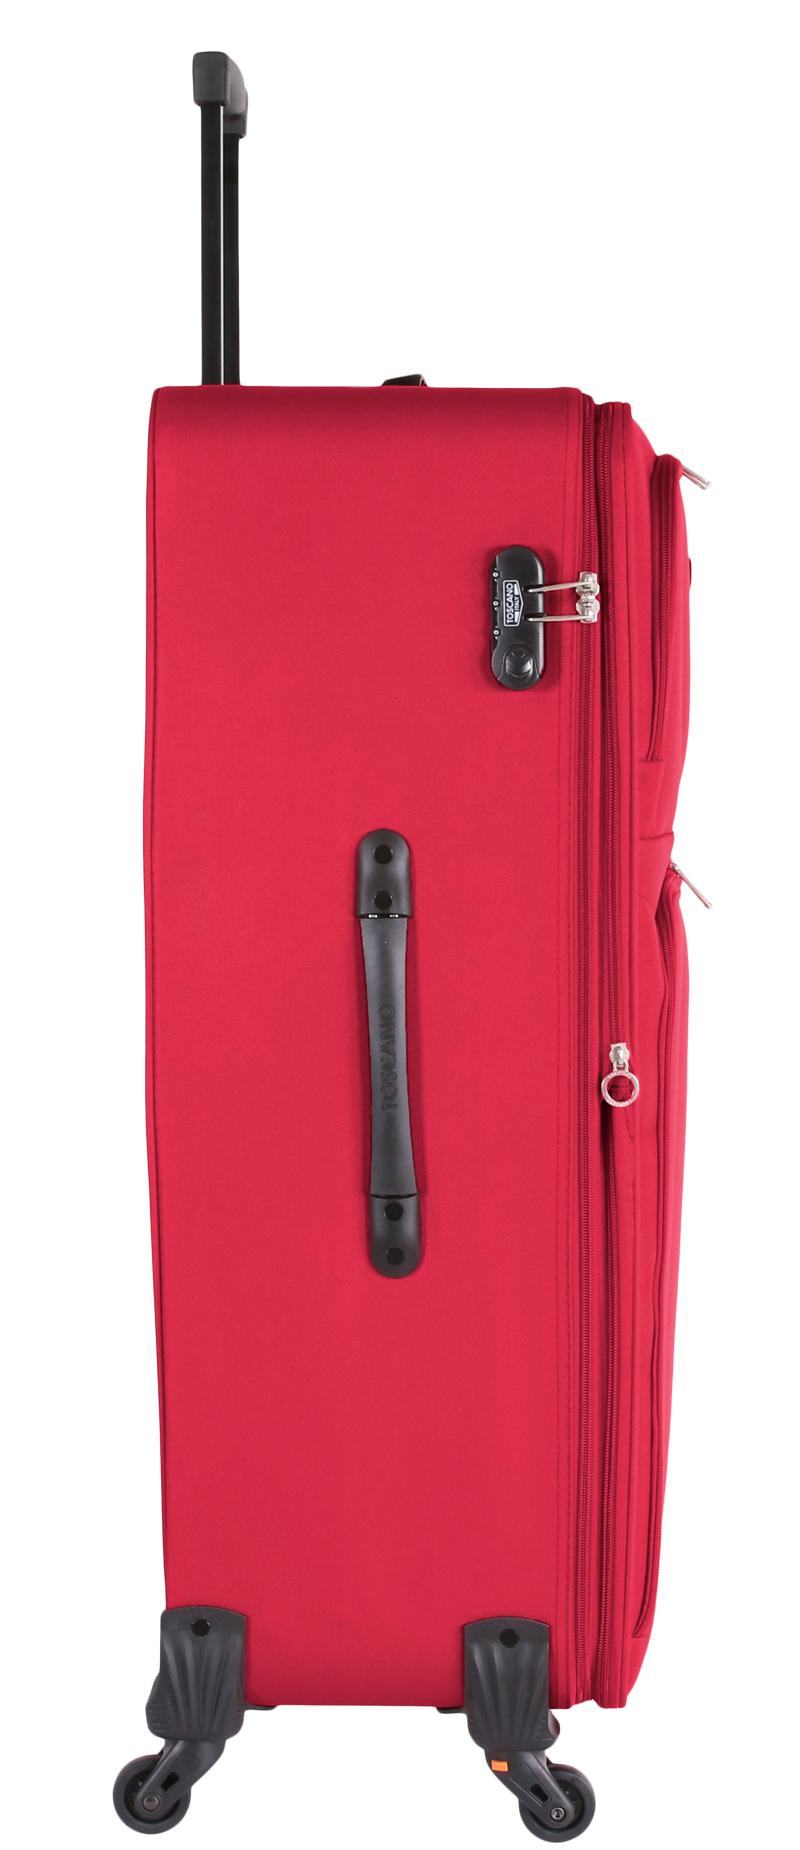 TOSCANO NOTEVOLE 03 PC (19", 27", 31") Lightweight Travel Luggage Set